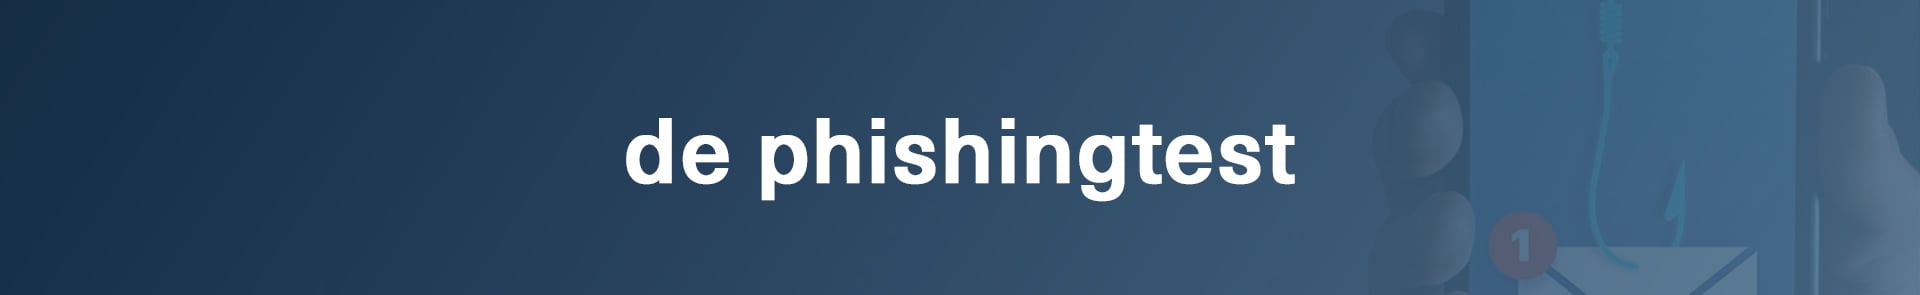 Phishingtest_header